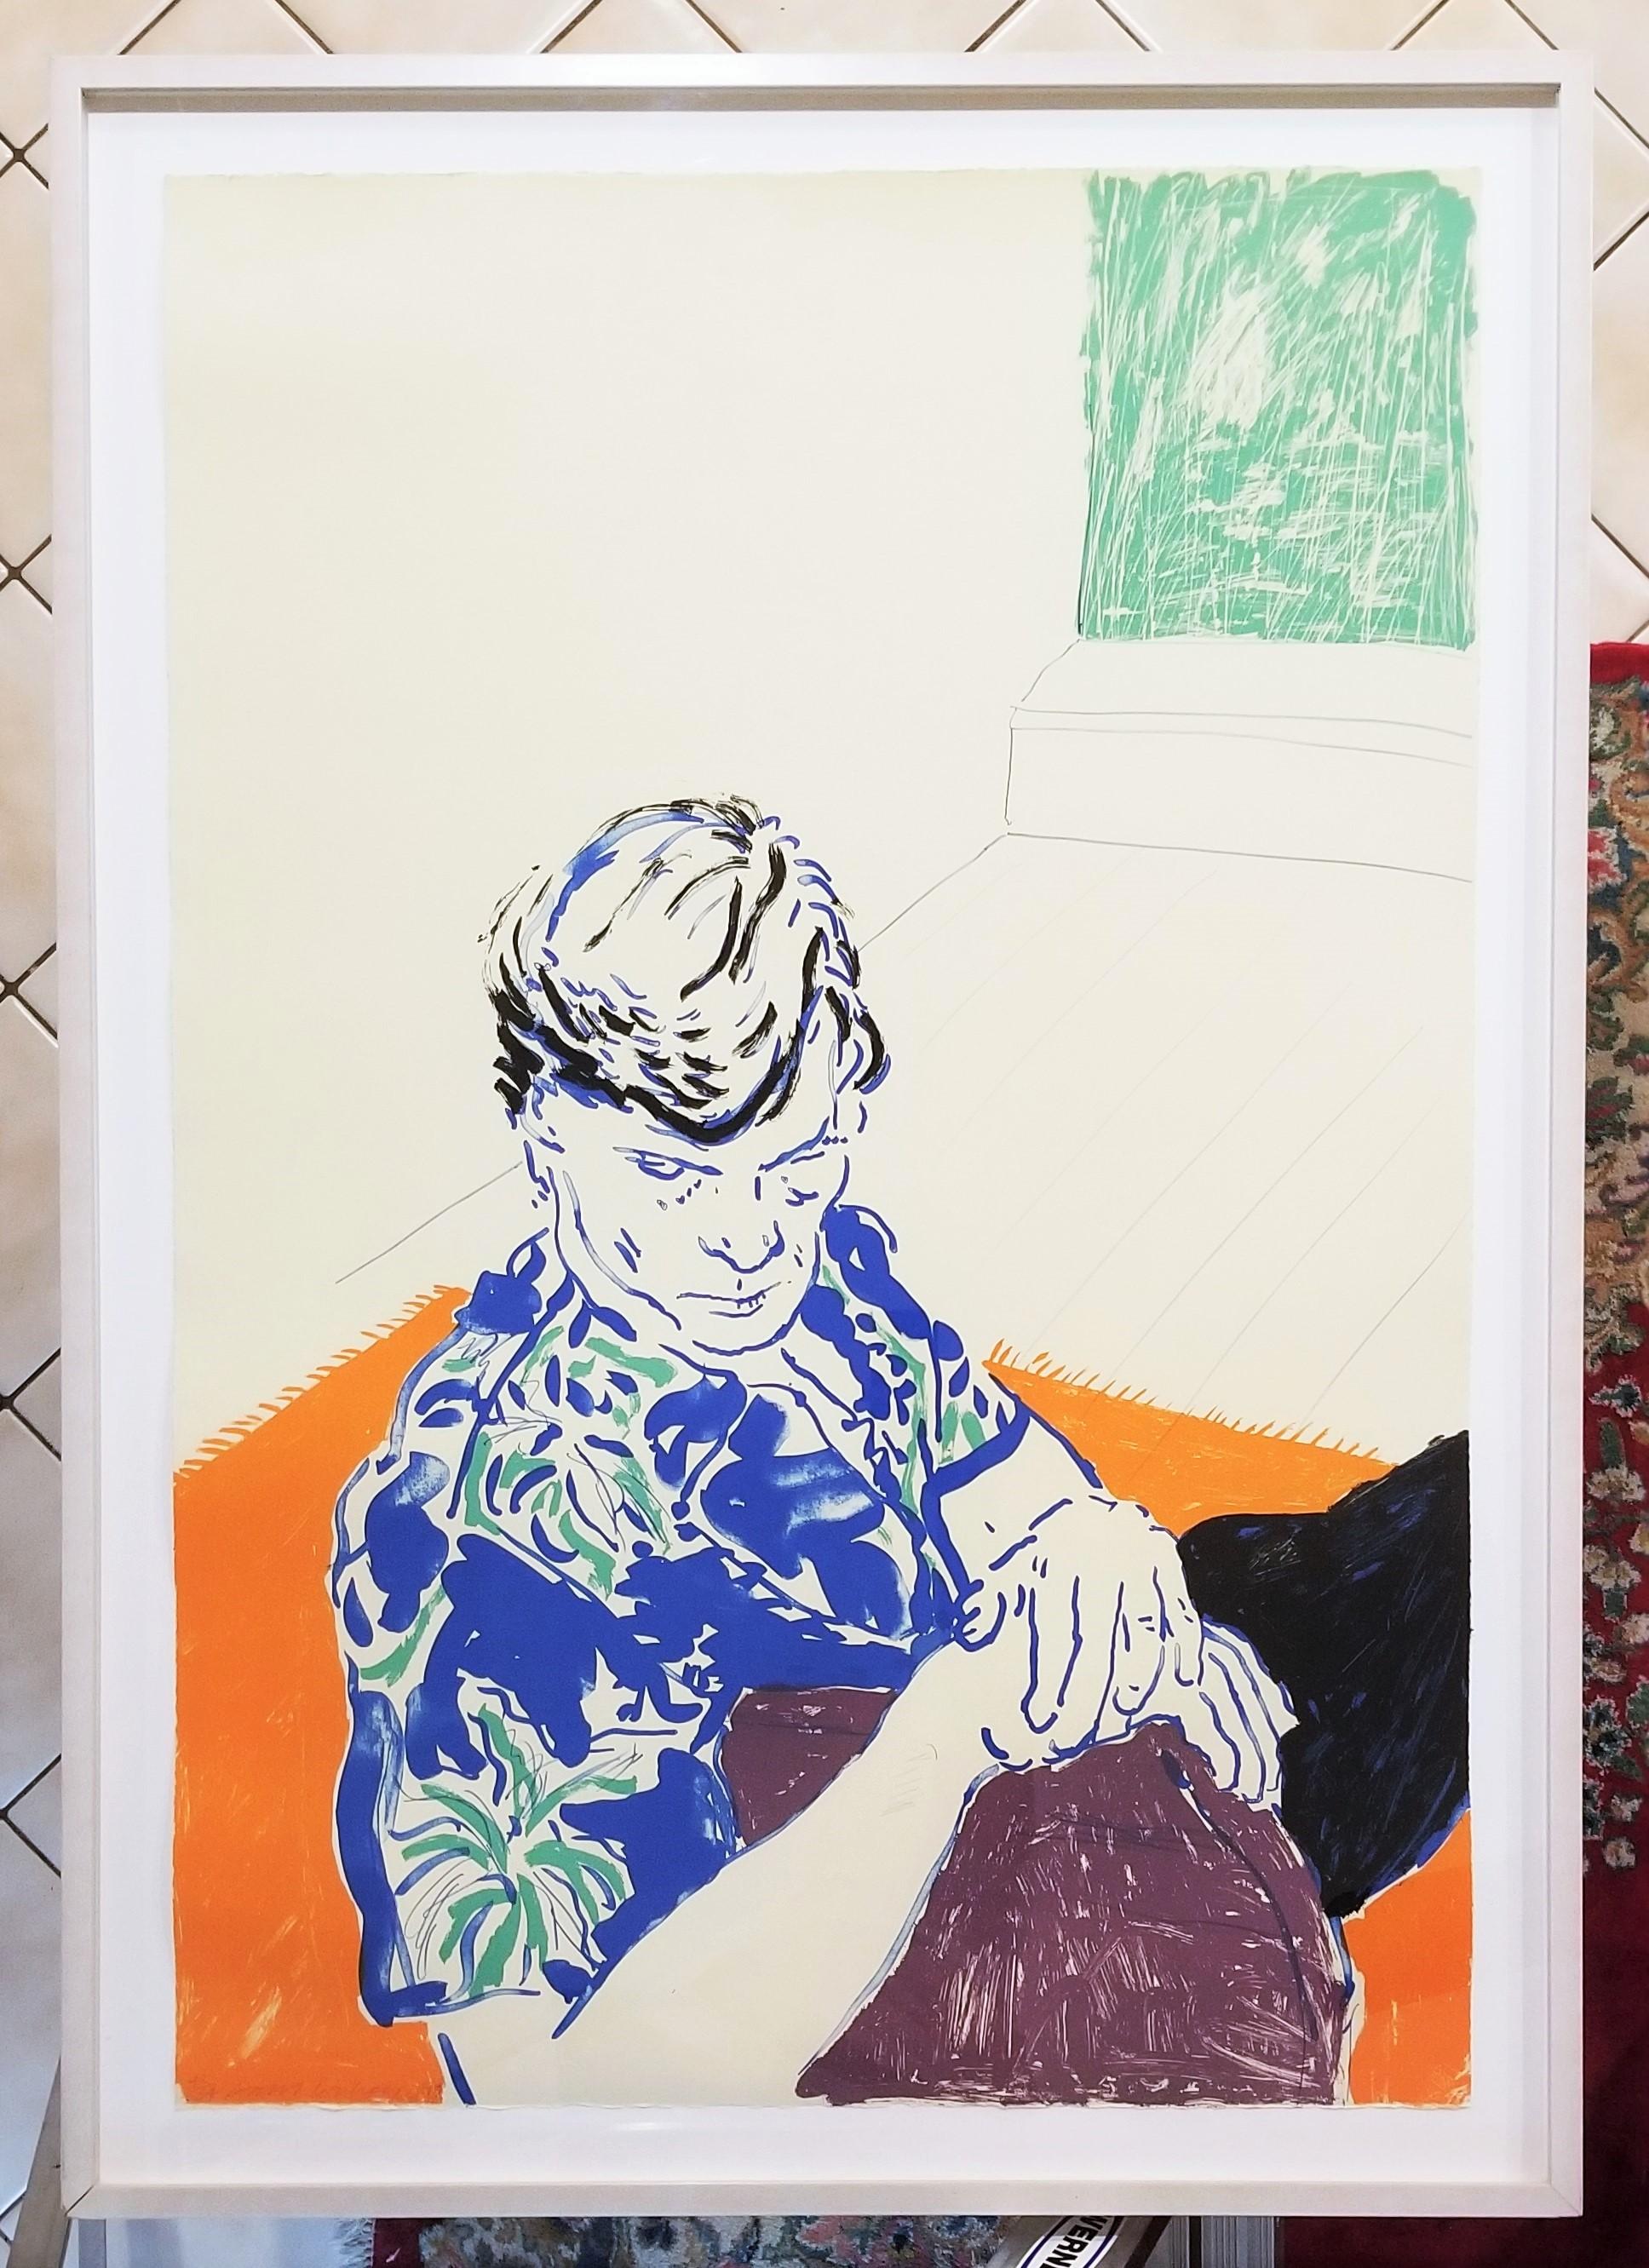 Joe with Green Window - Contemporary Print by David Hockney